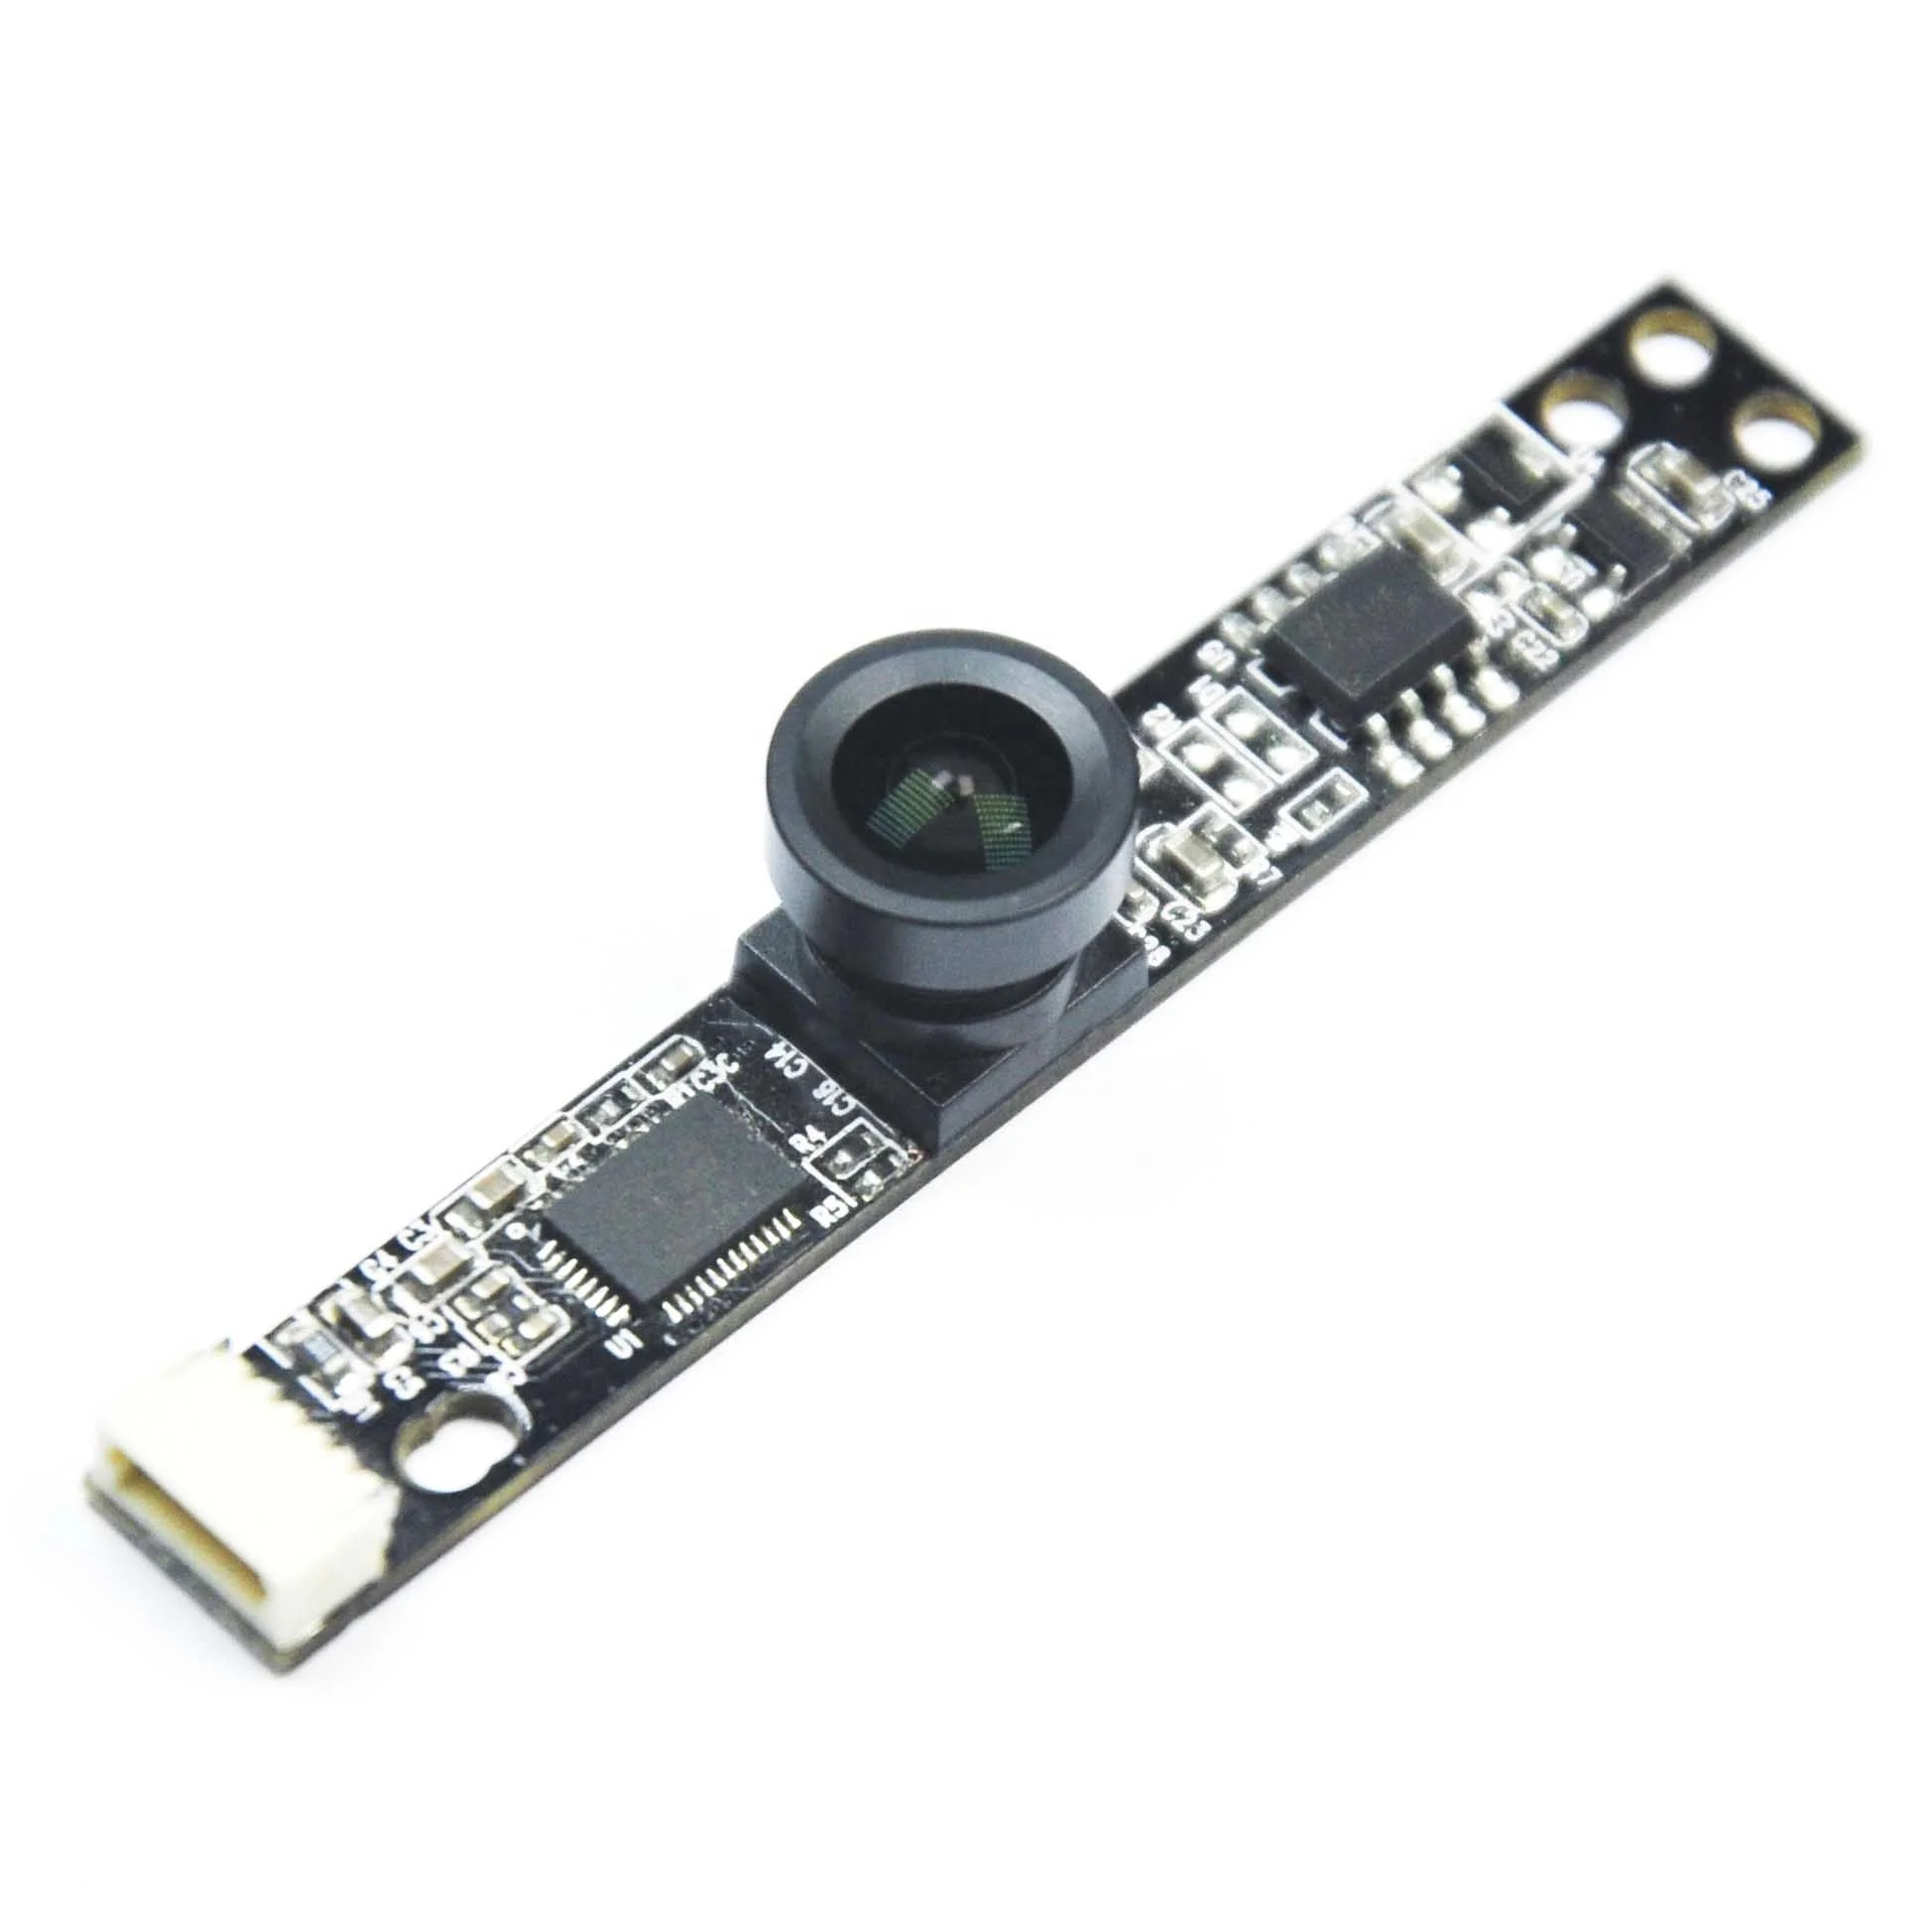 1MP HD 720P JX-H62 Sensor 30FPS FF 120° USB Camera Modules Wide Angle MJPEG, YUV2 images - 6